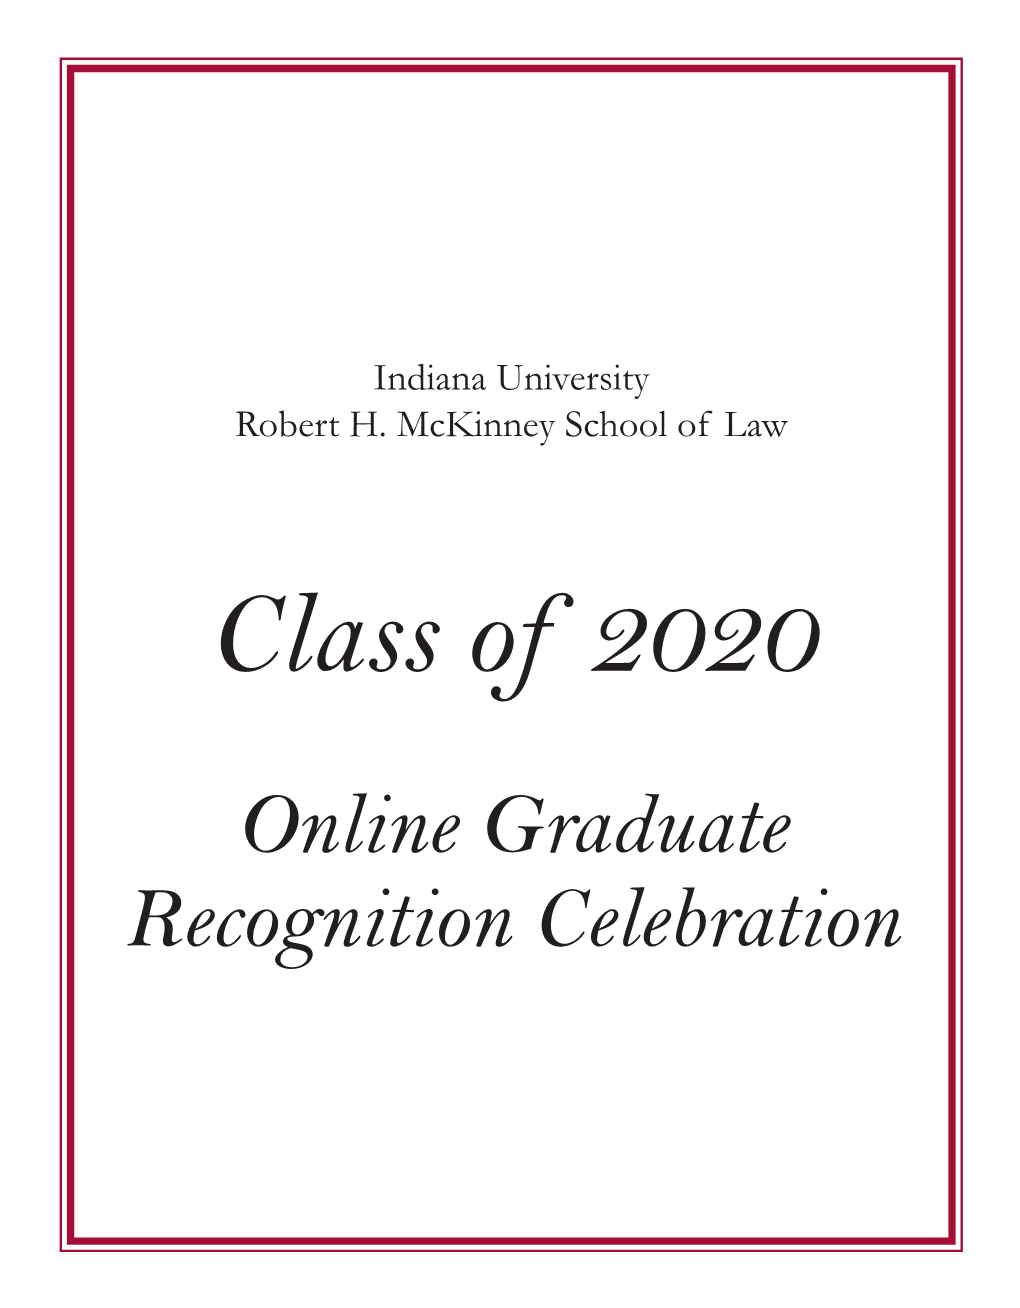 Indiana University Robert H. Mckinney School of Law Online Graduate Recognition Celebration